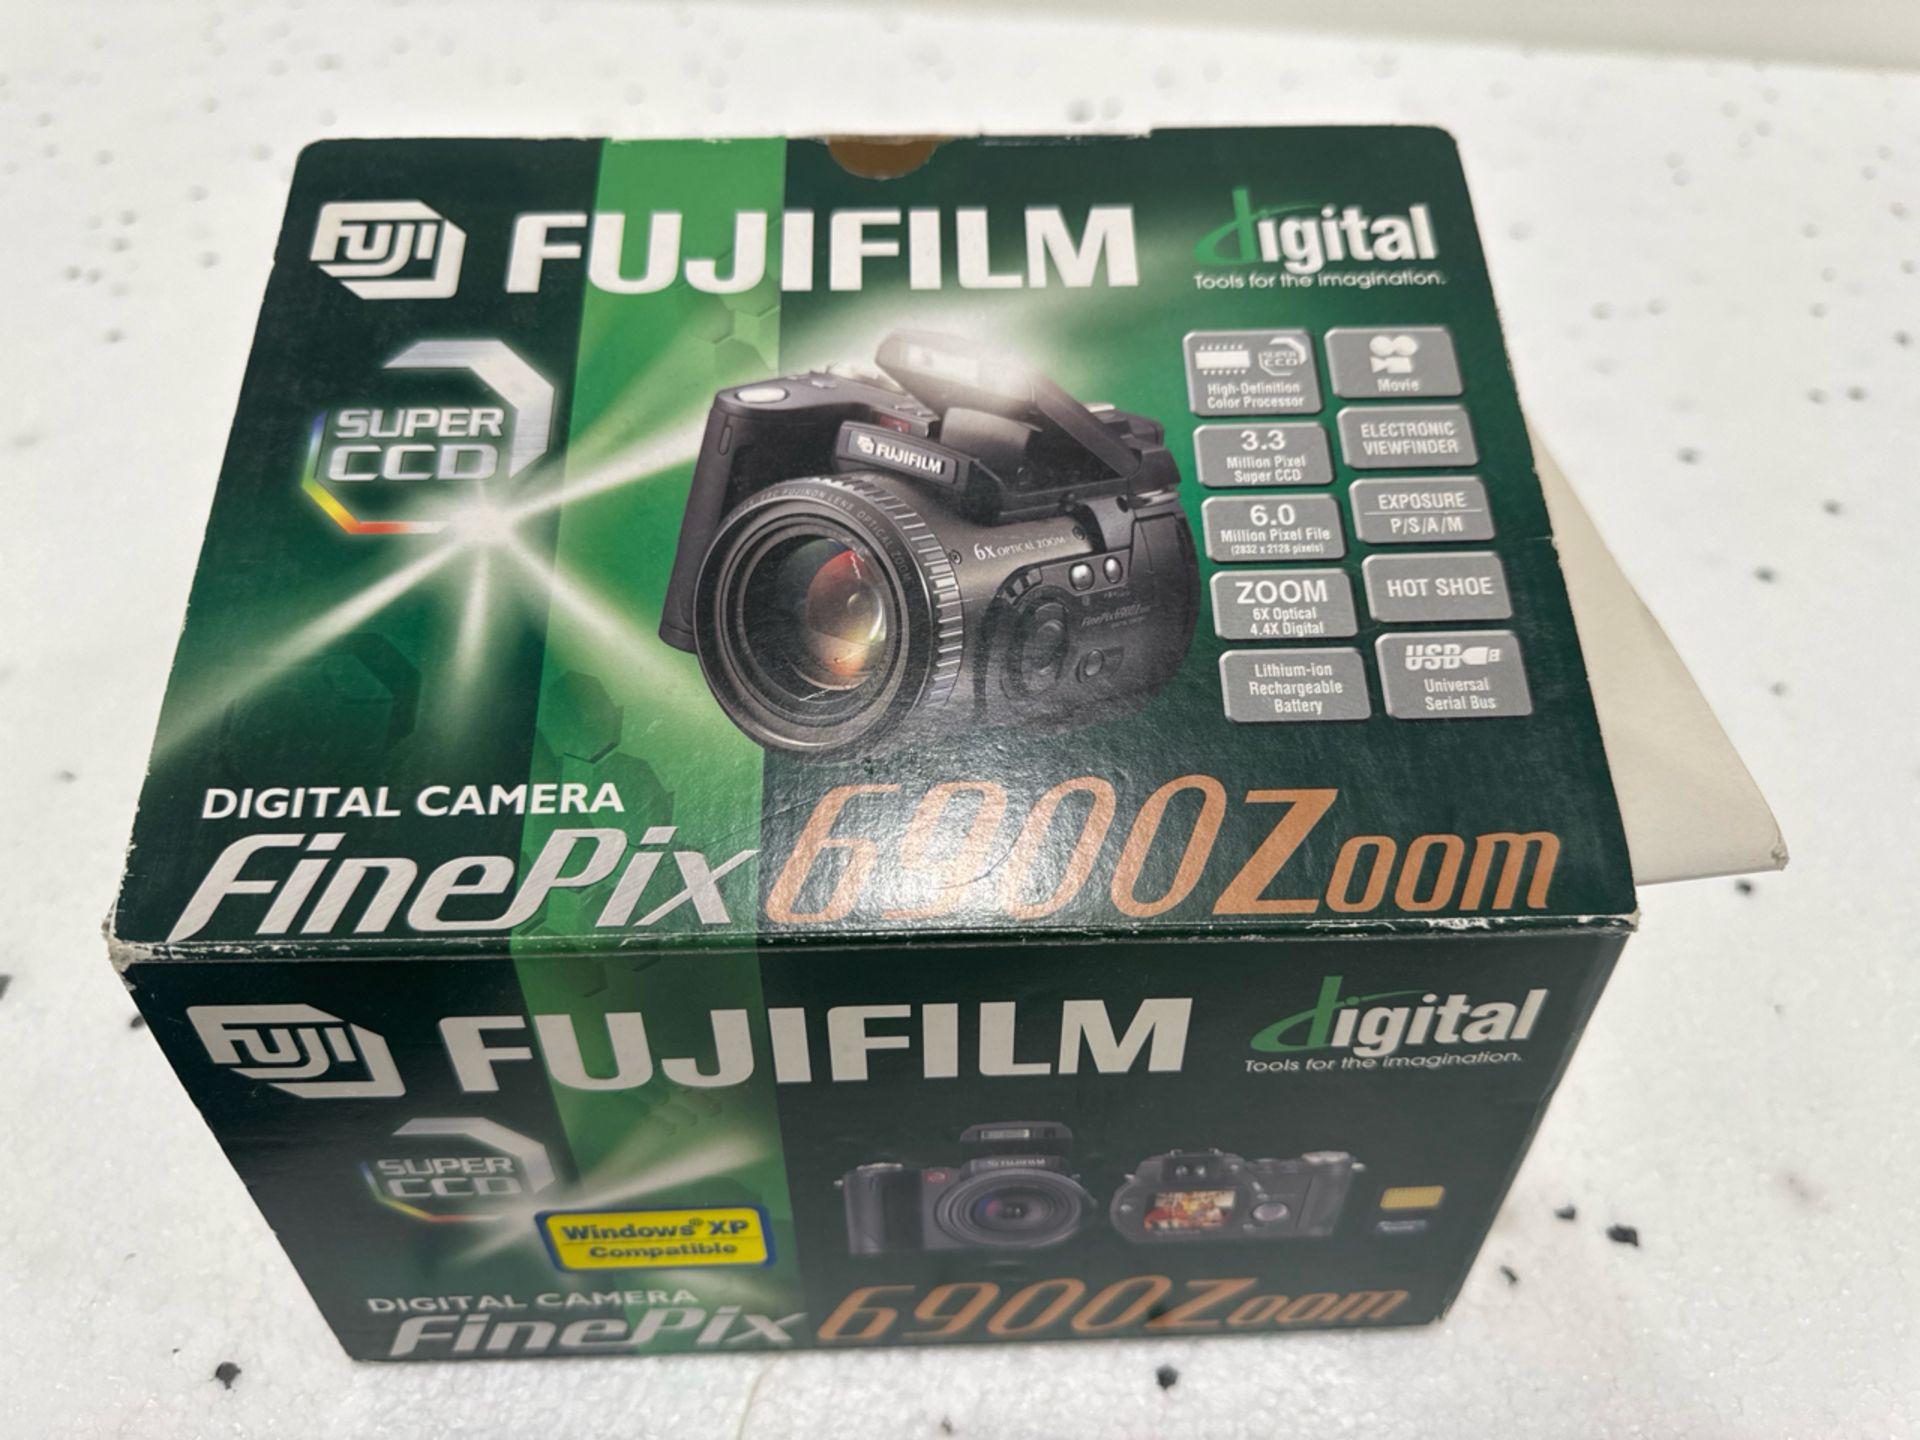 Fujifilm FinePix 6900Z Digitla Camera - Image 5 of 5